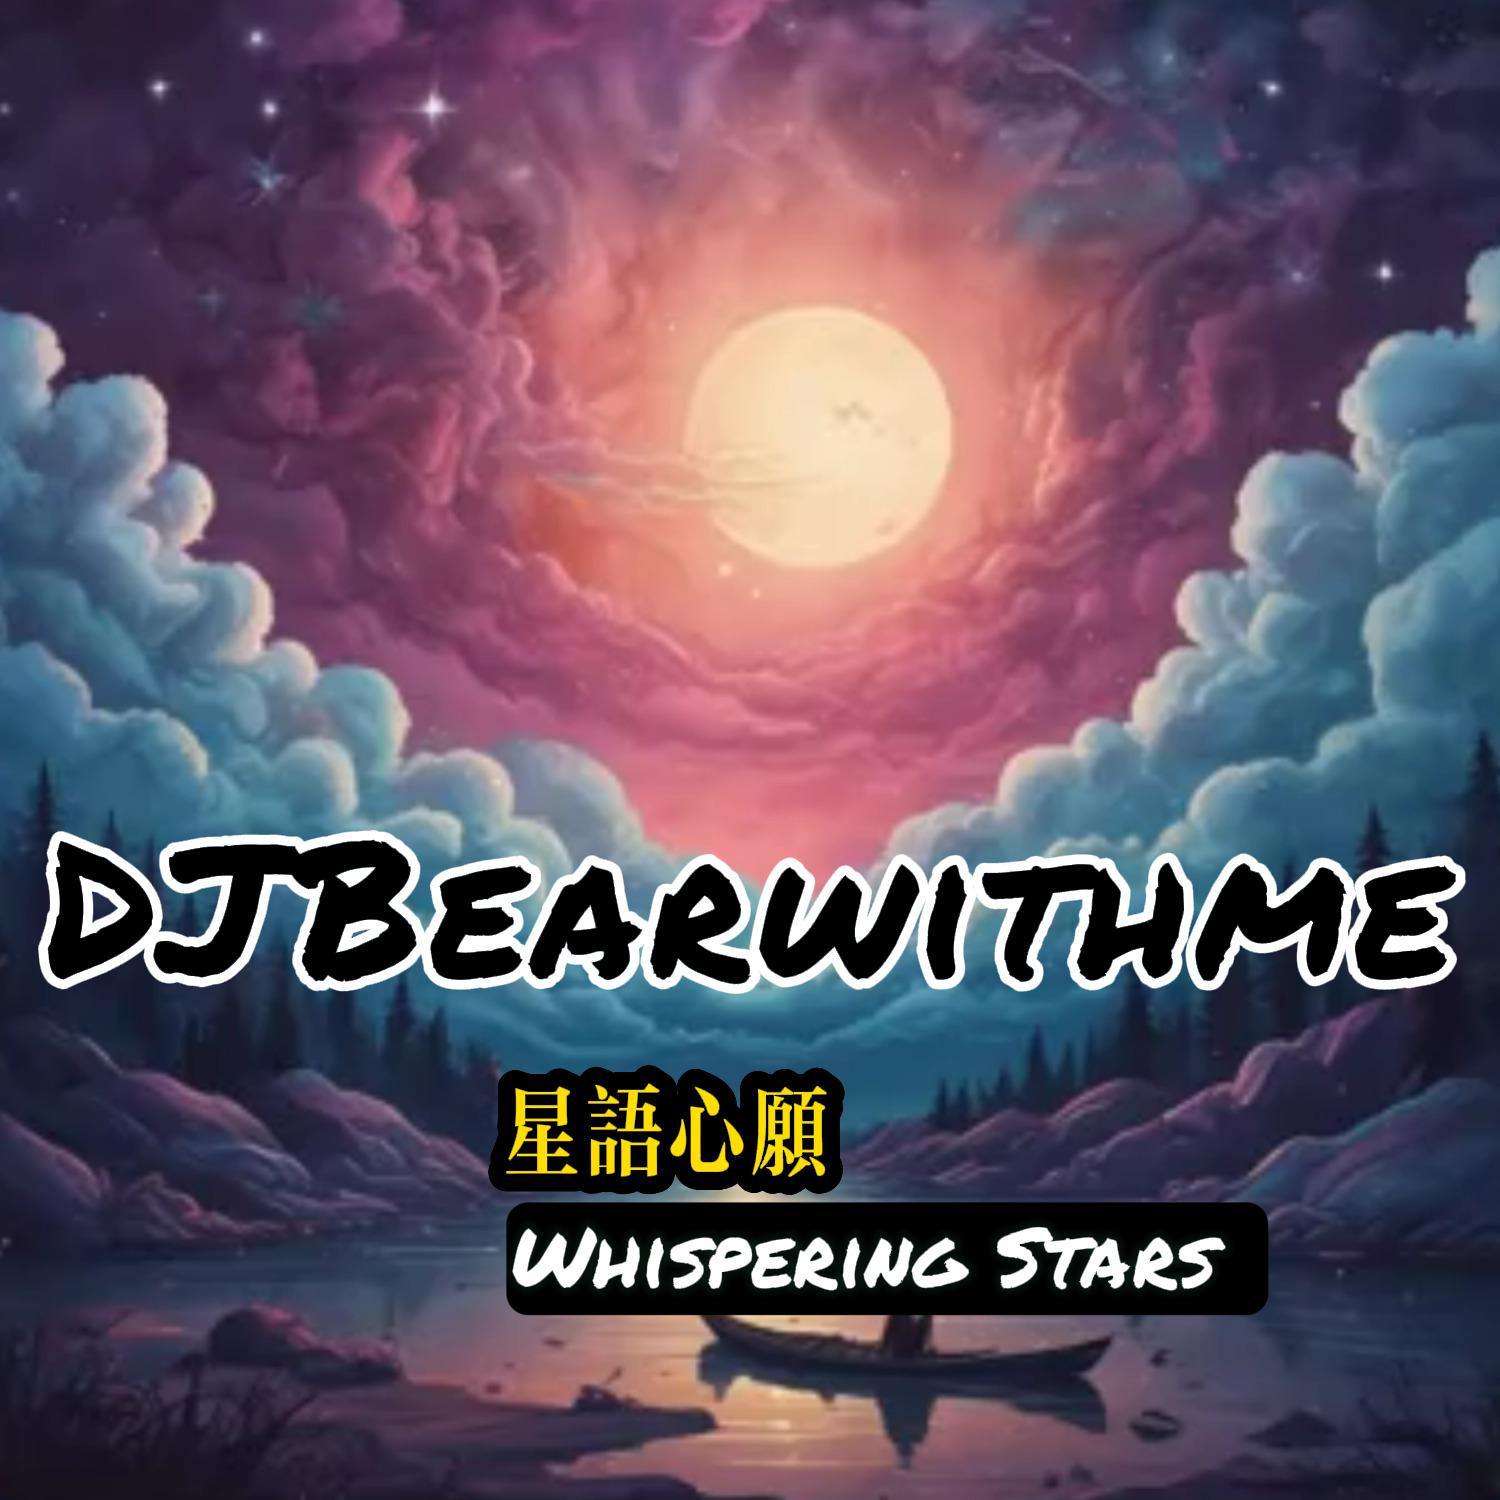 DJBearwithme - 星语心愿 Whispering Stars (live)